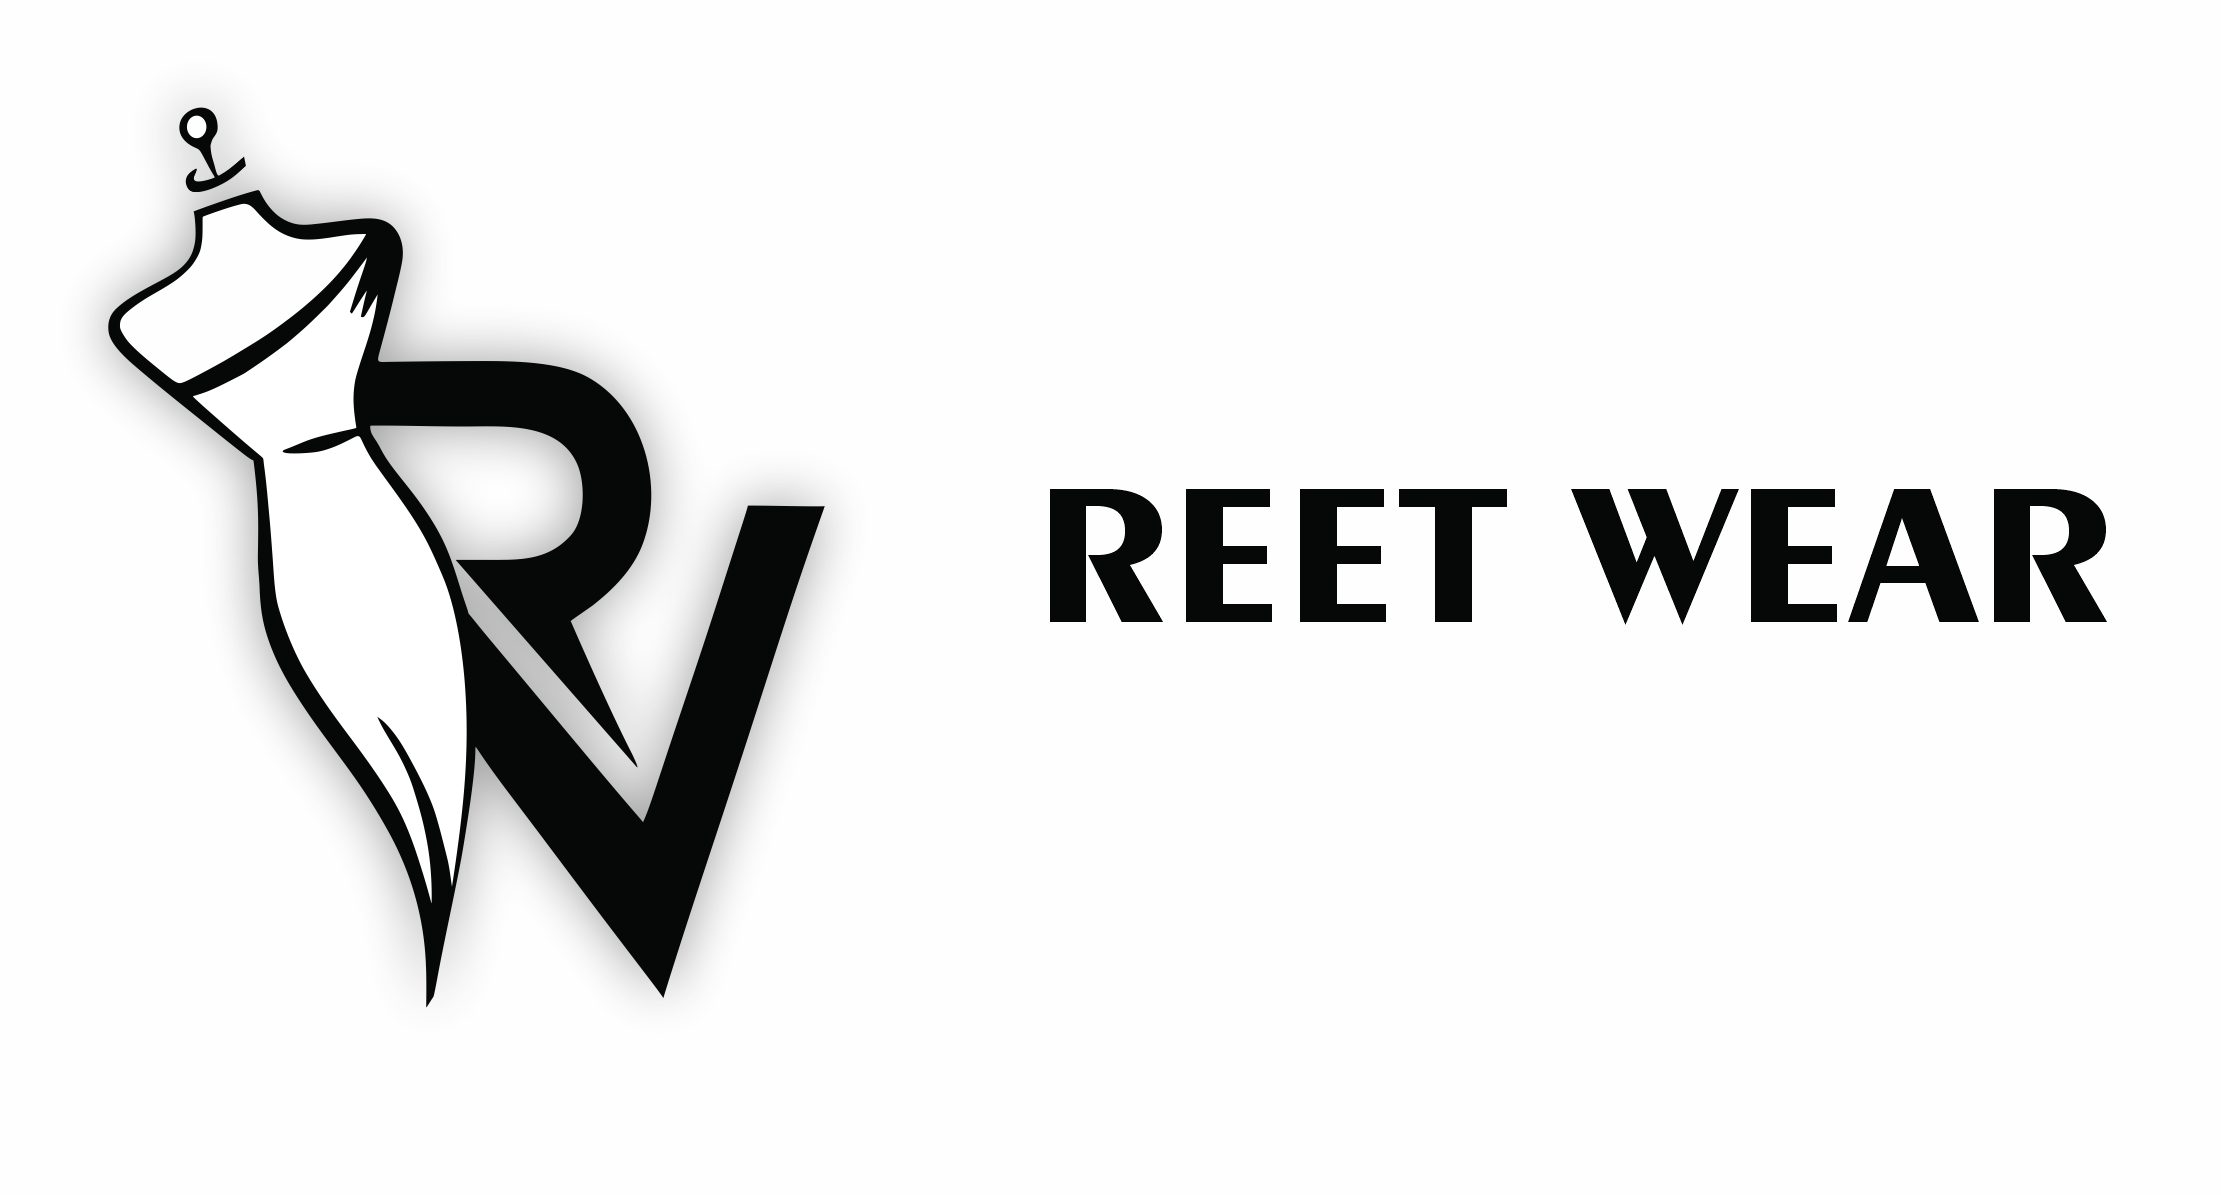 ReetWear - Clothing Store